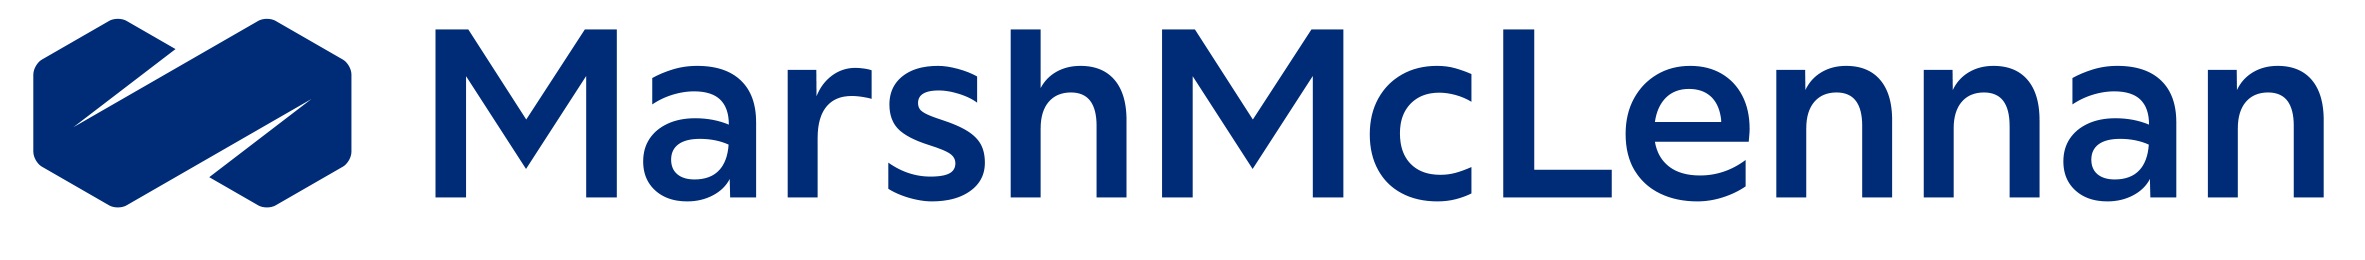 MarshMcLennan logo.jpg